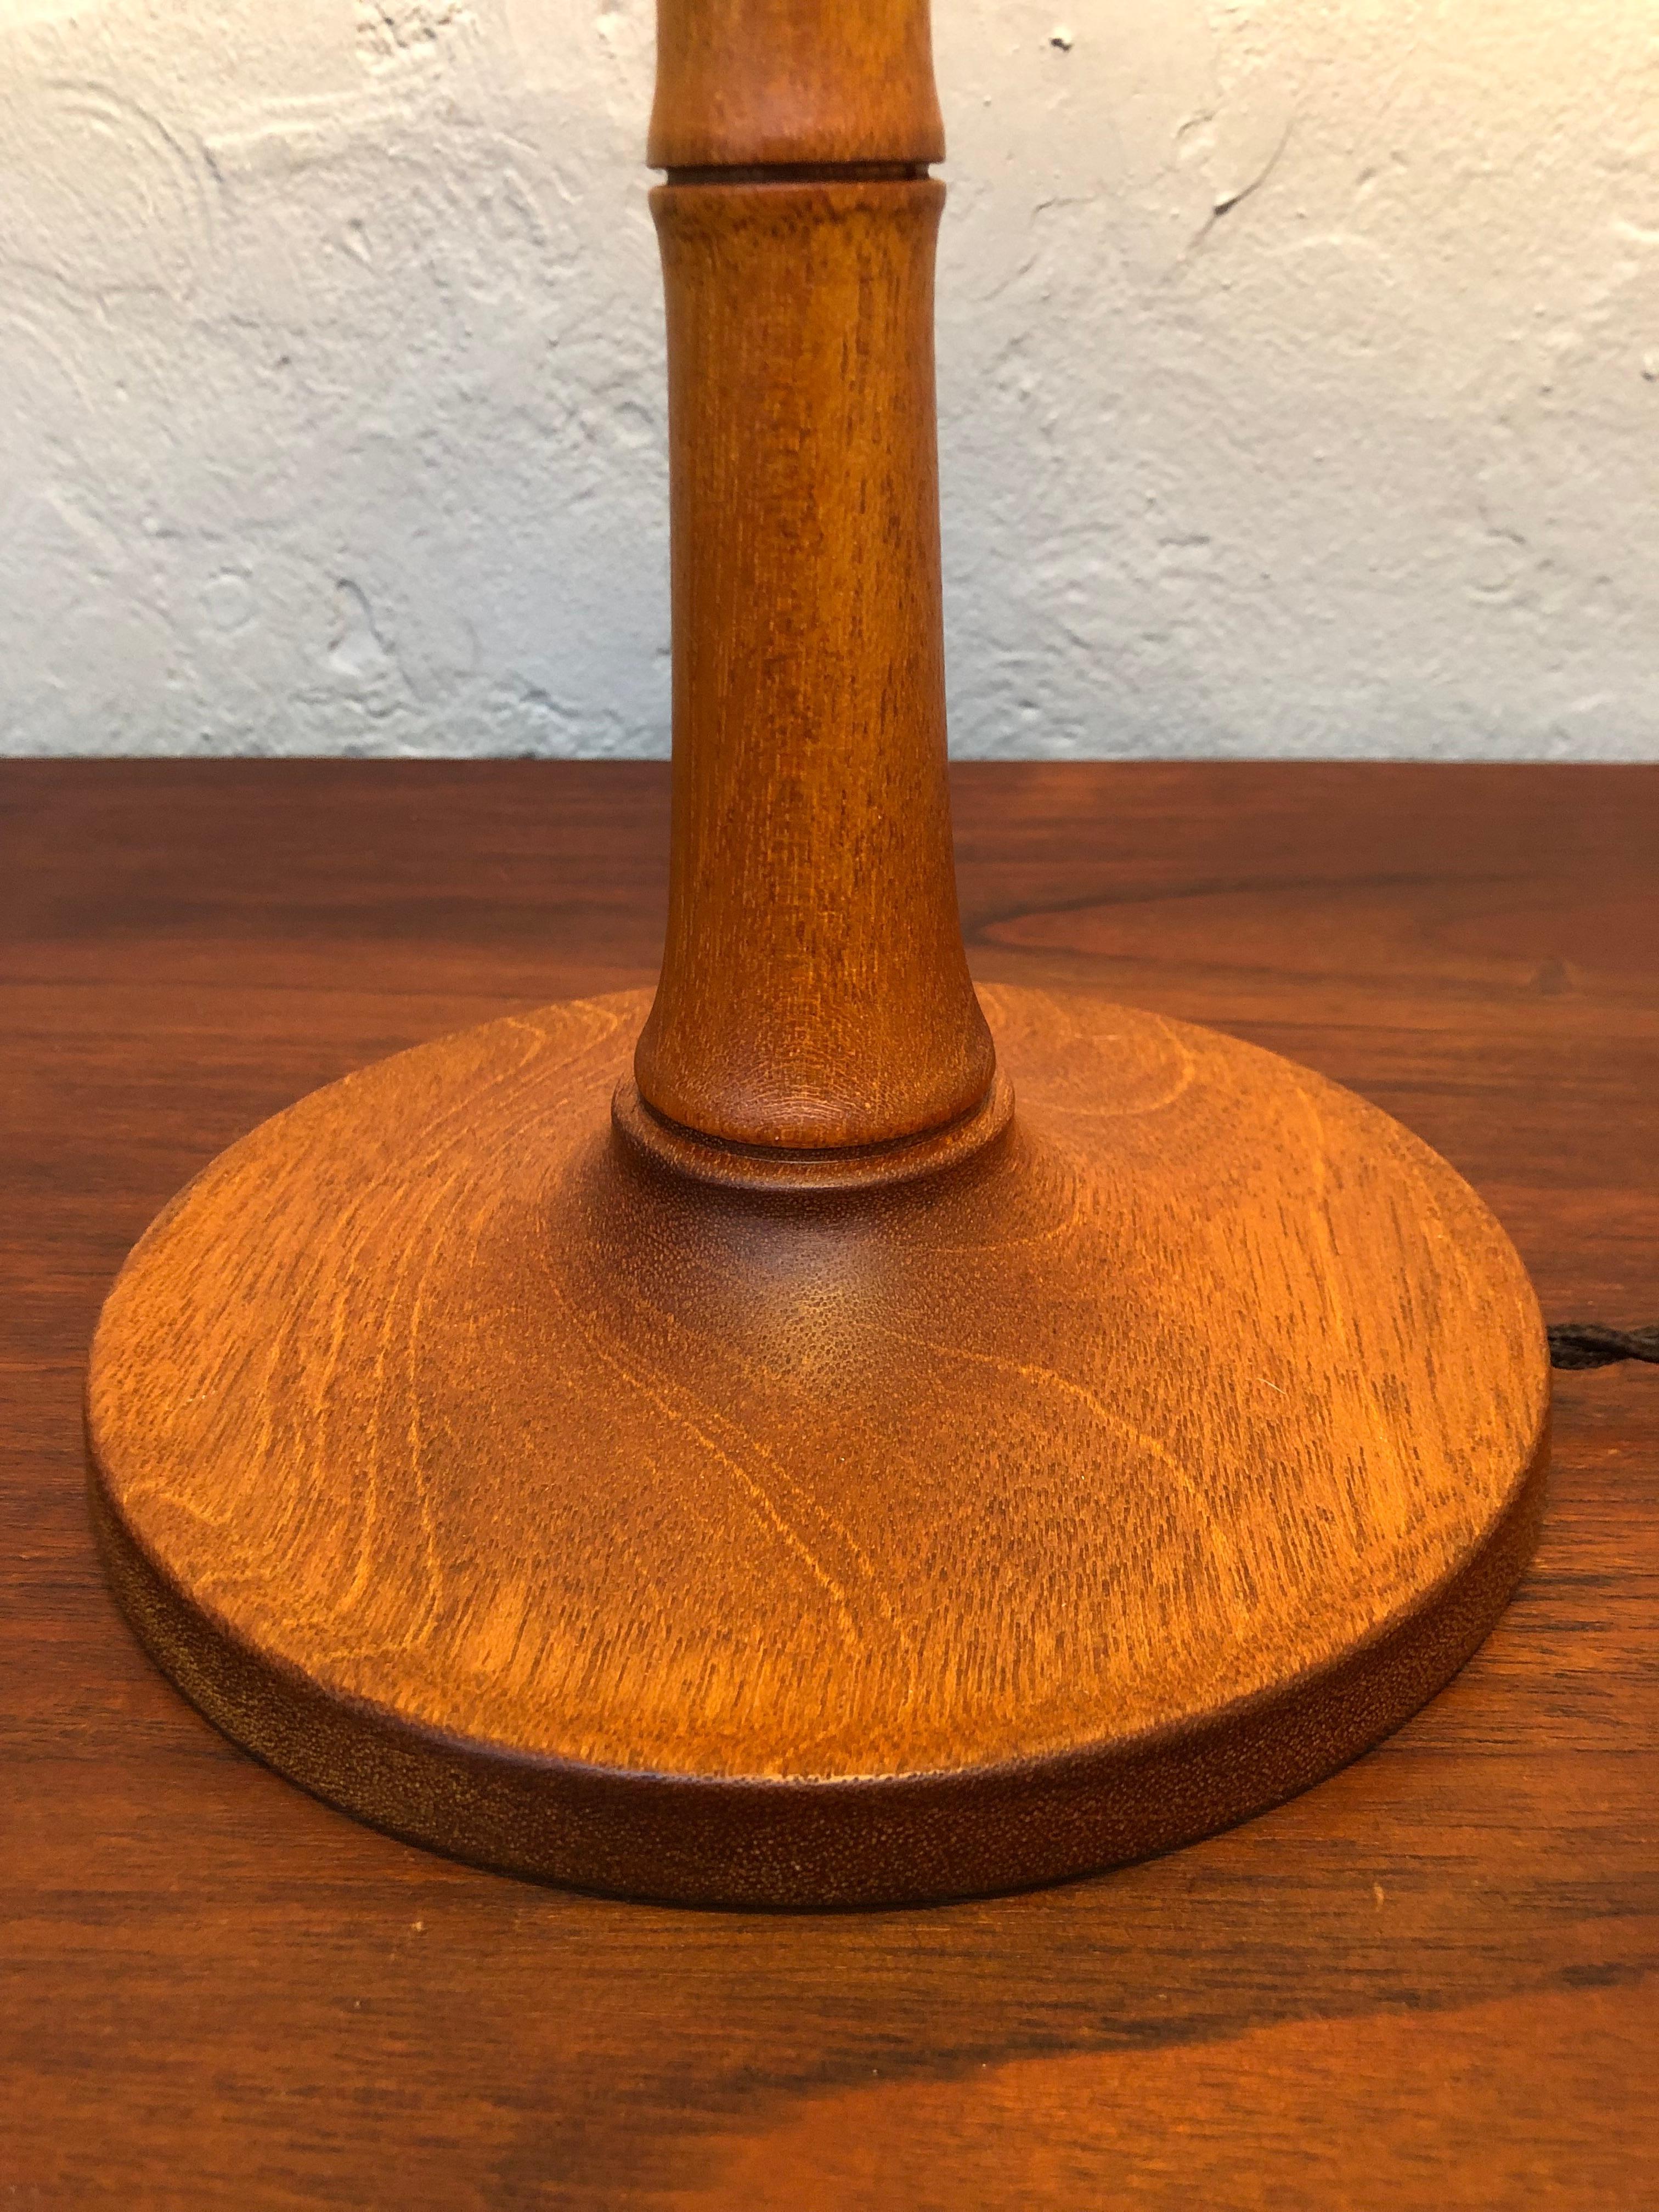 Oak A Vintage Teak Table Lamp by Esben Klint for Le Klint from the 1940s For Sale